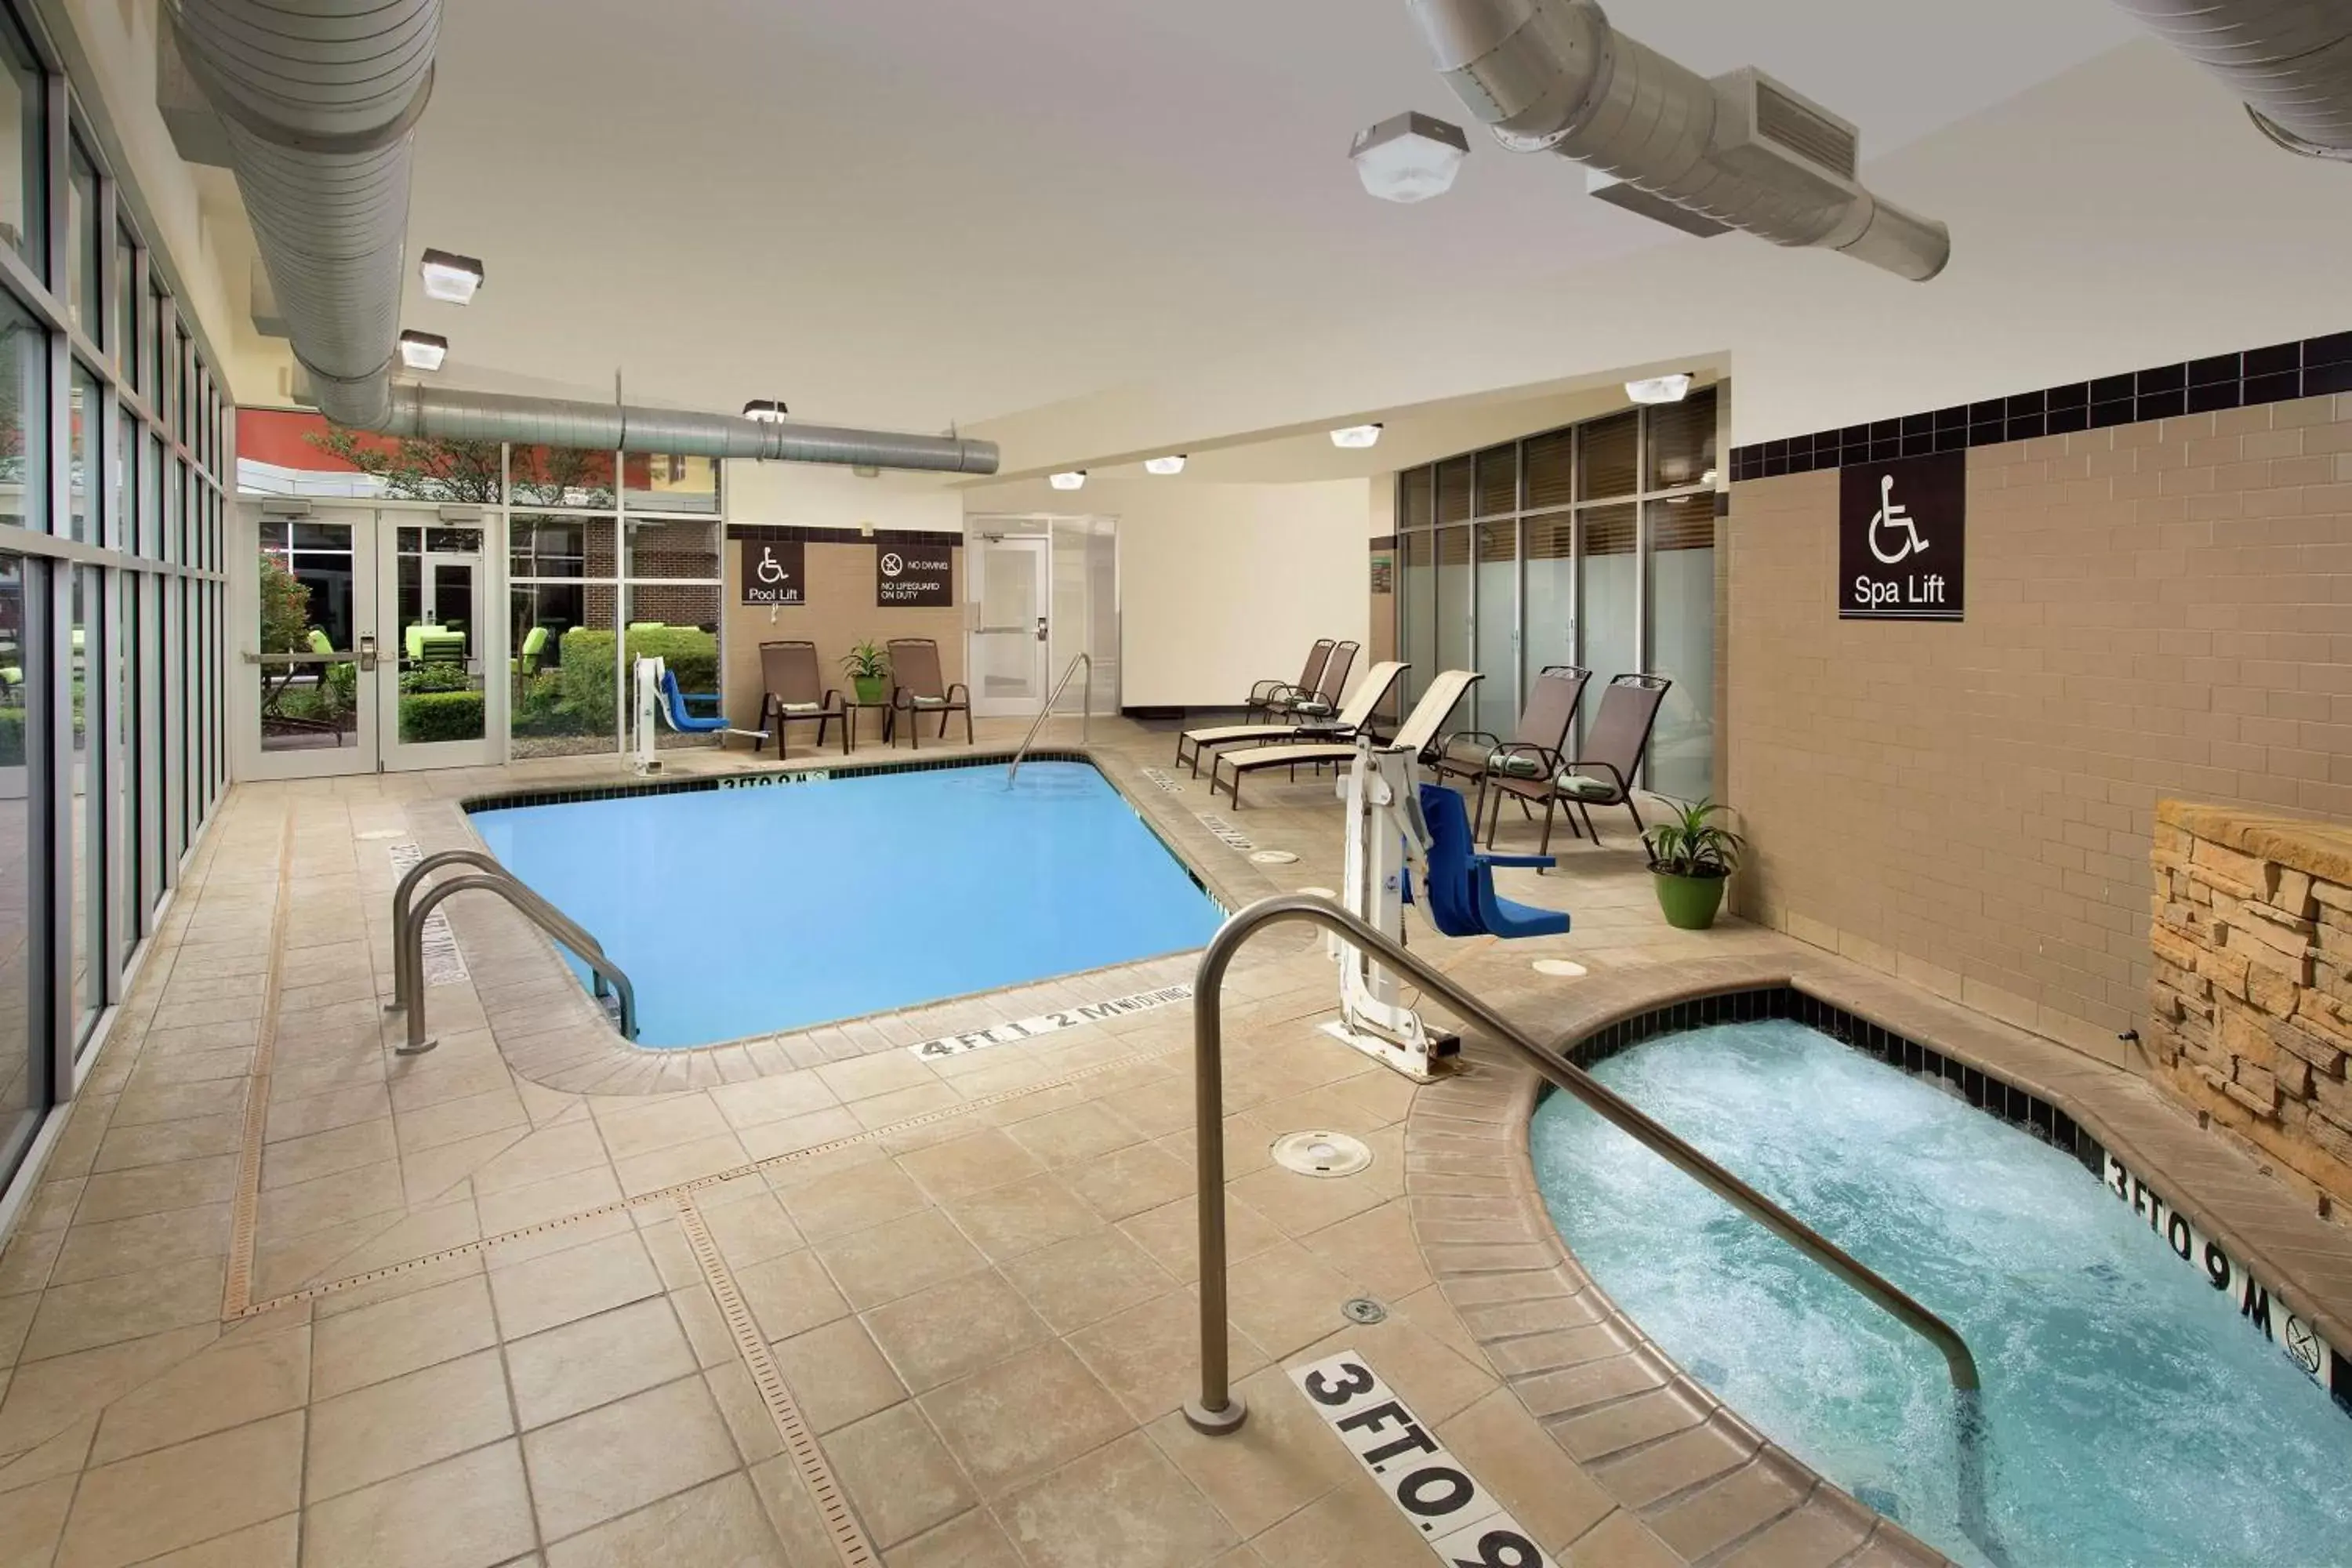 Swimming Pool in Hilton Garden Inn San Antonio Airport South